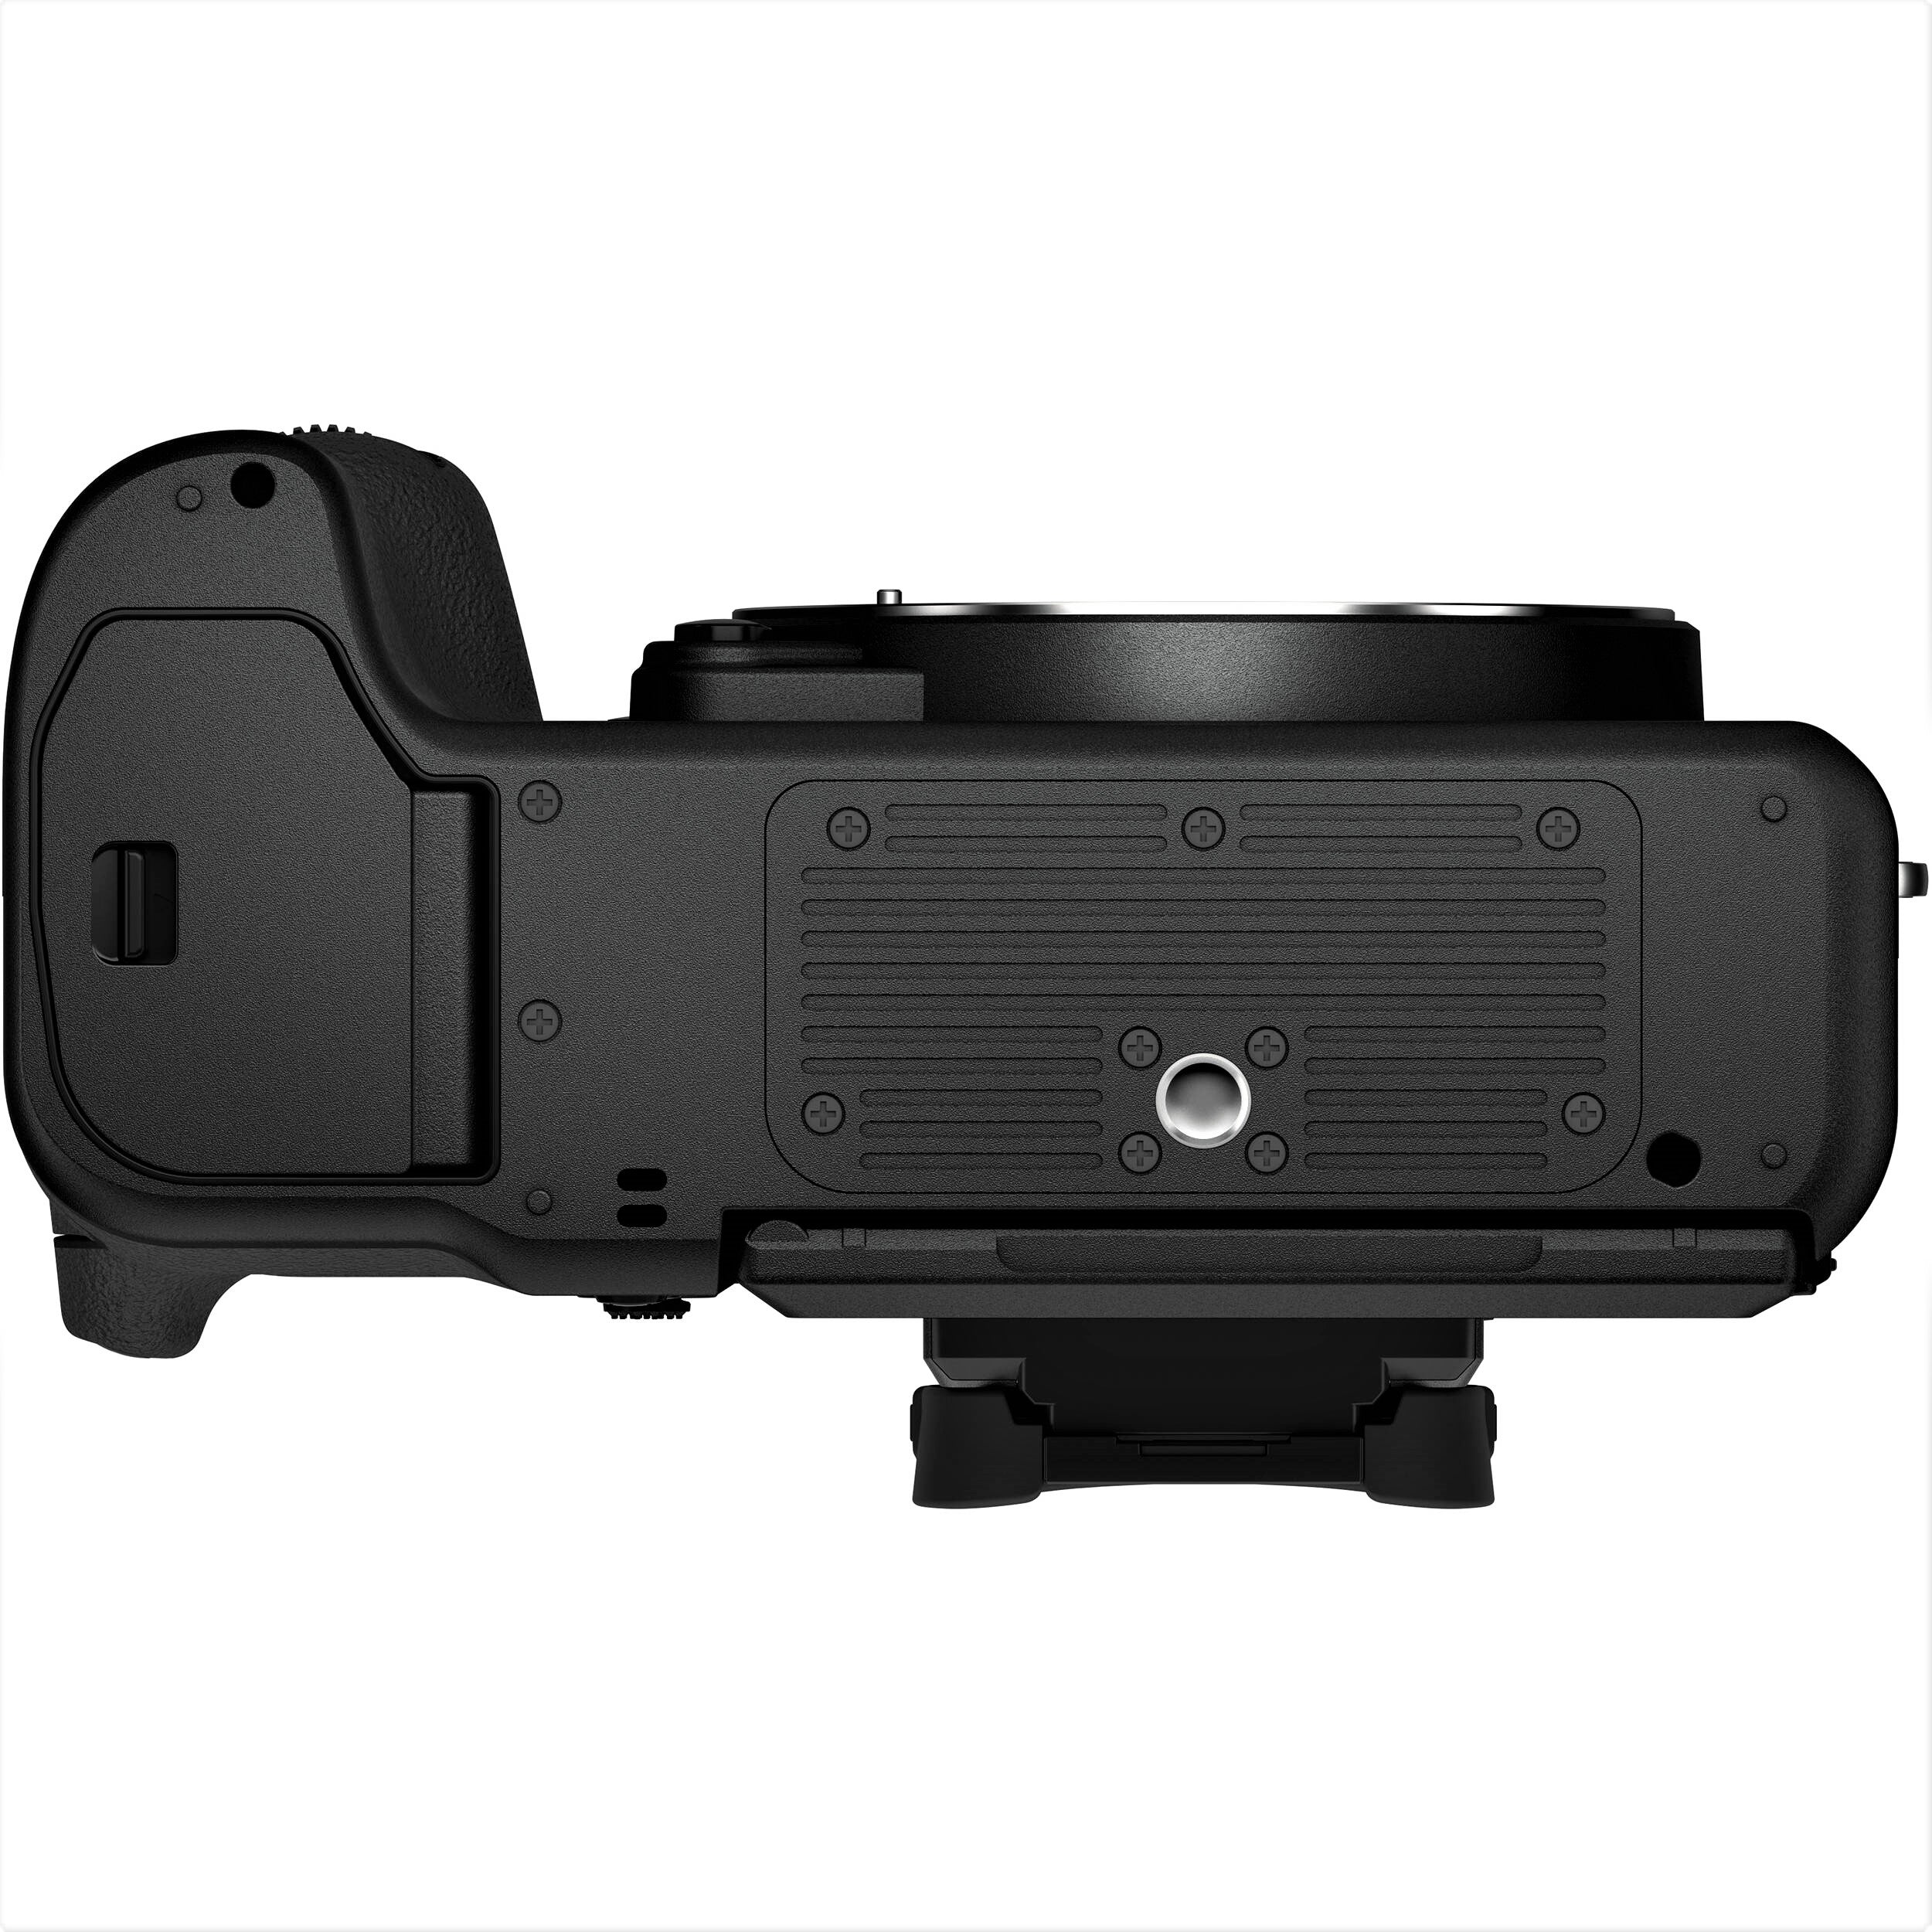 Fujifilm GFX 50S II Body with GF35-70mm F4.5-5.6 WR Lens Kit - Bottom View